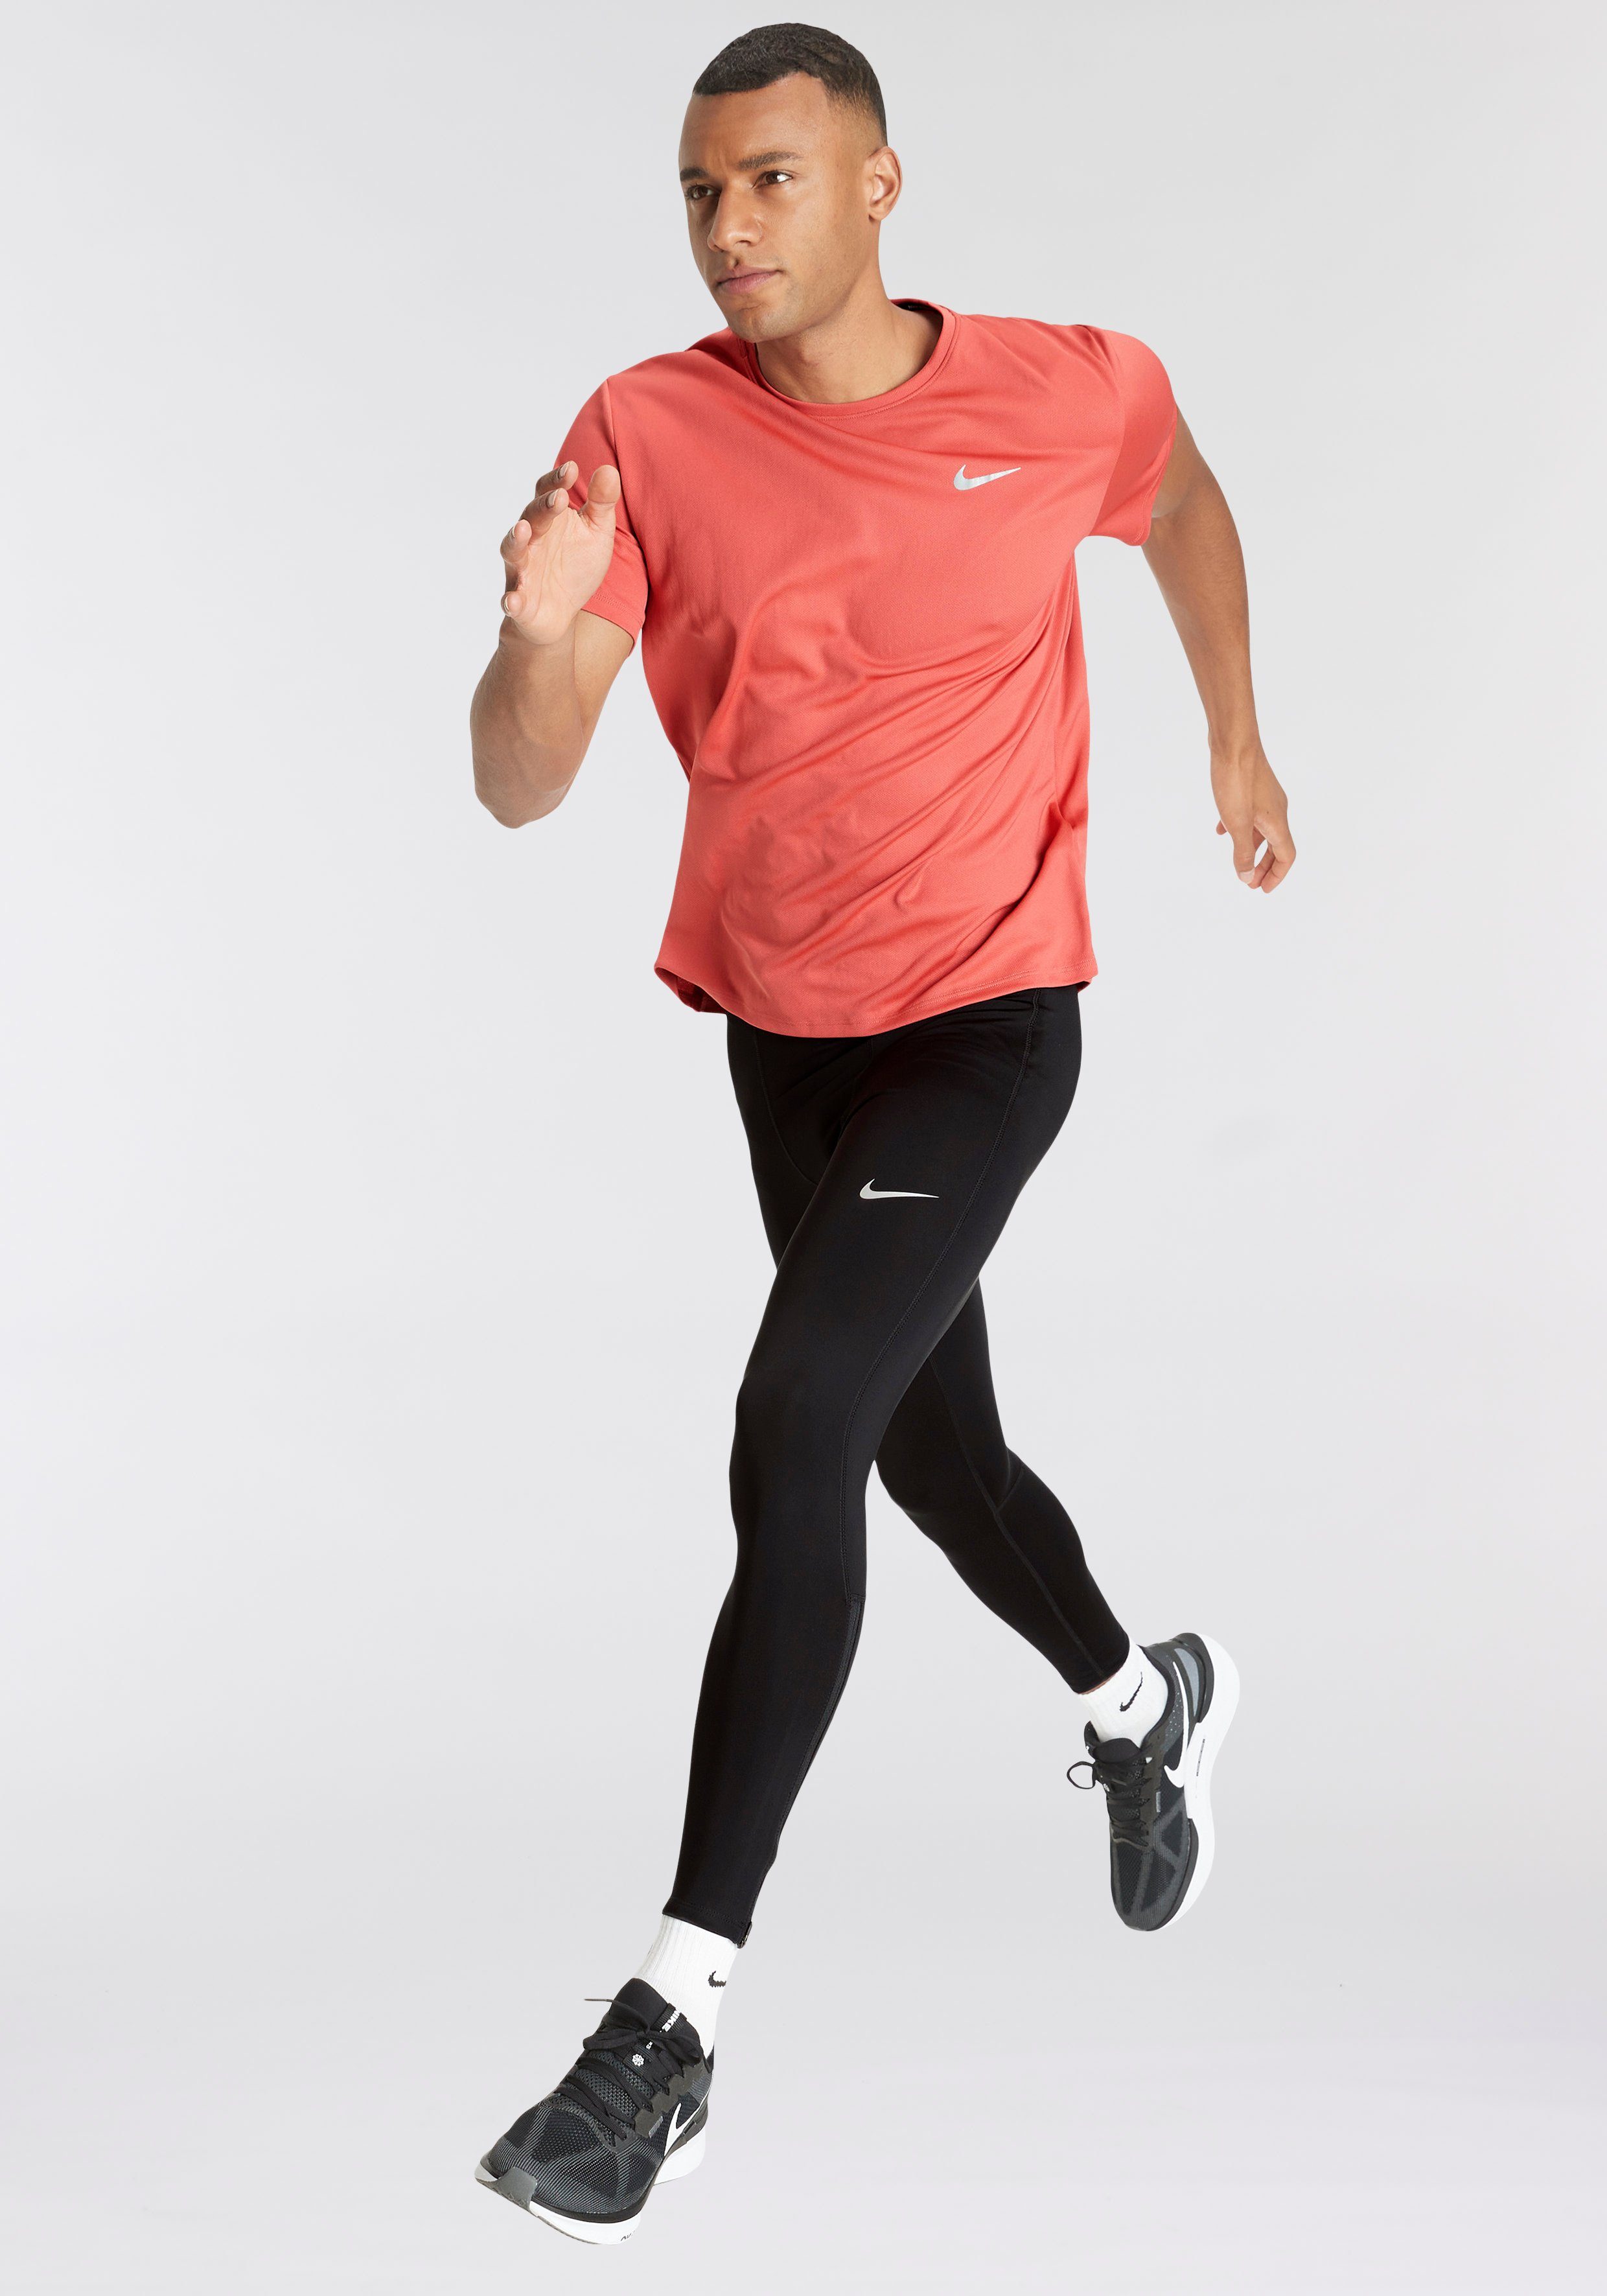 SHORT-SLEEVE TOP Nike ADOBE/REFLECTIVE MEN'S UV Laufshirt RUNNING MILER SILV DRI-FIT